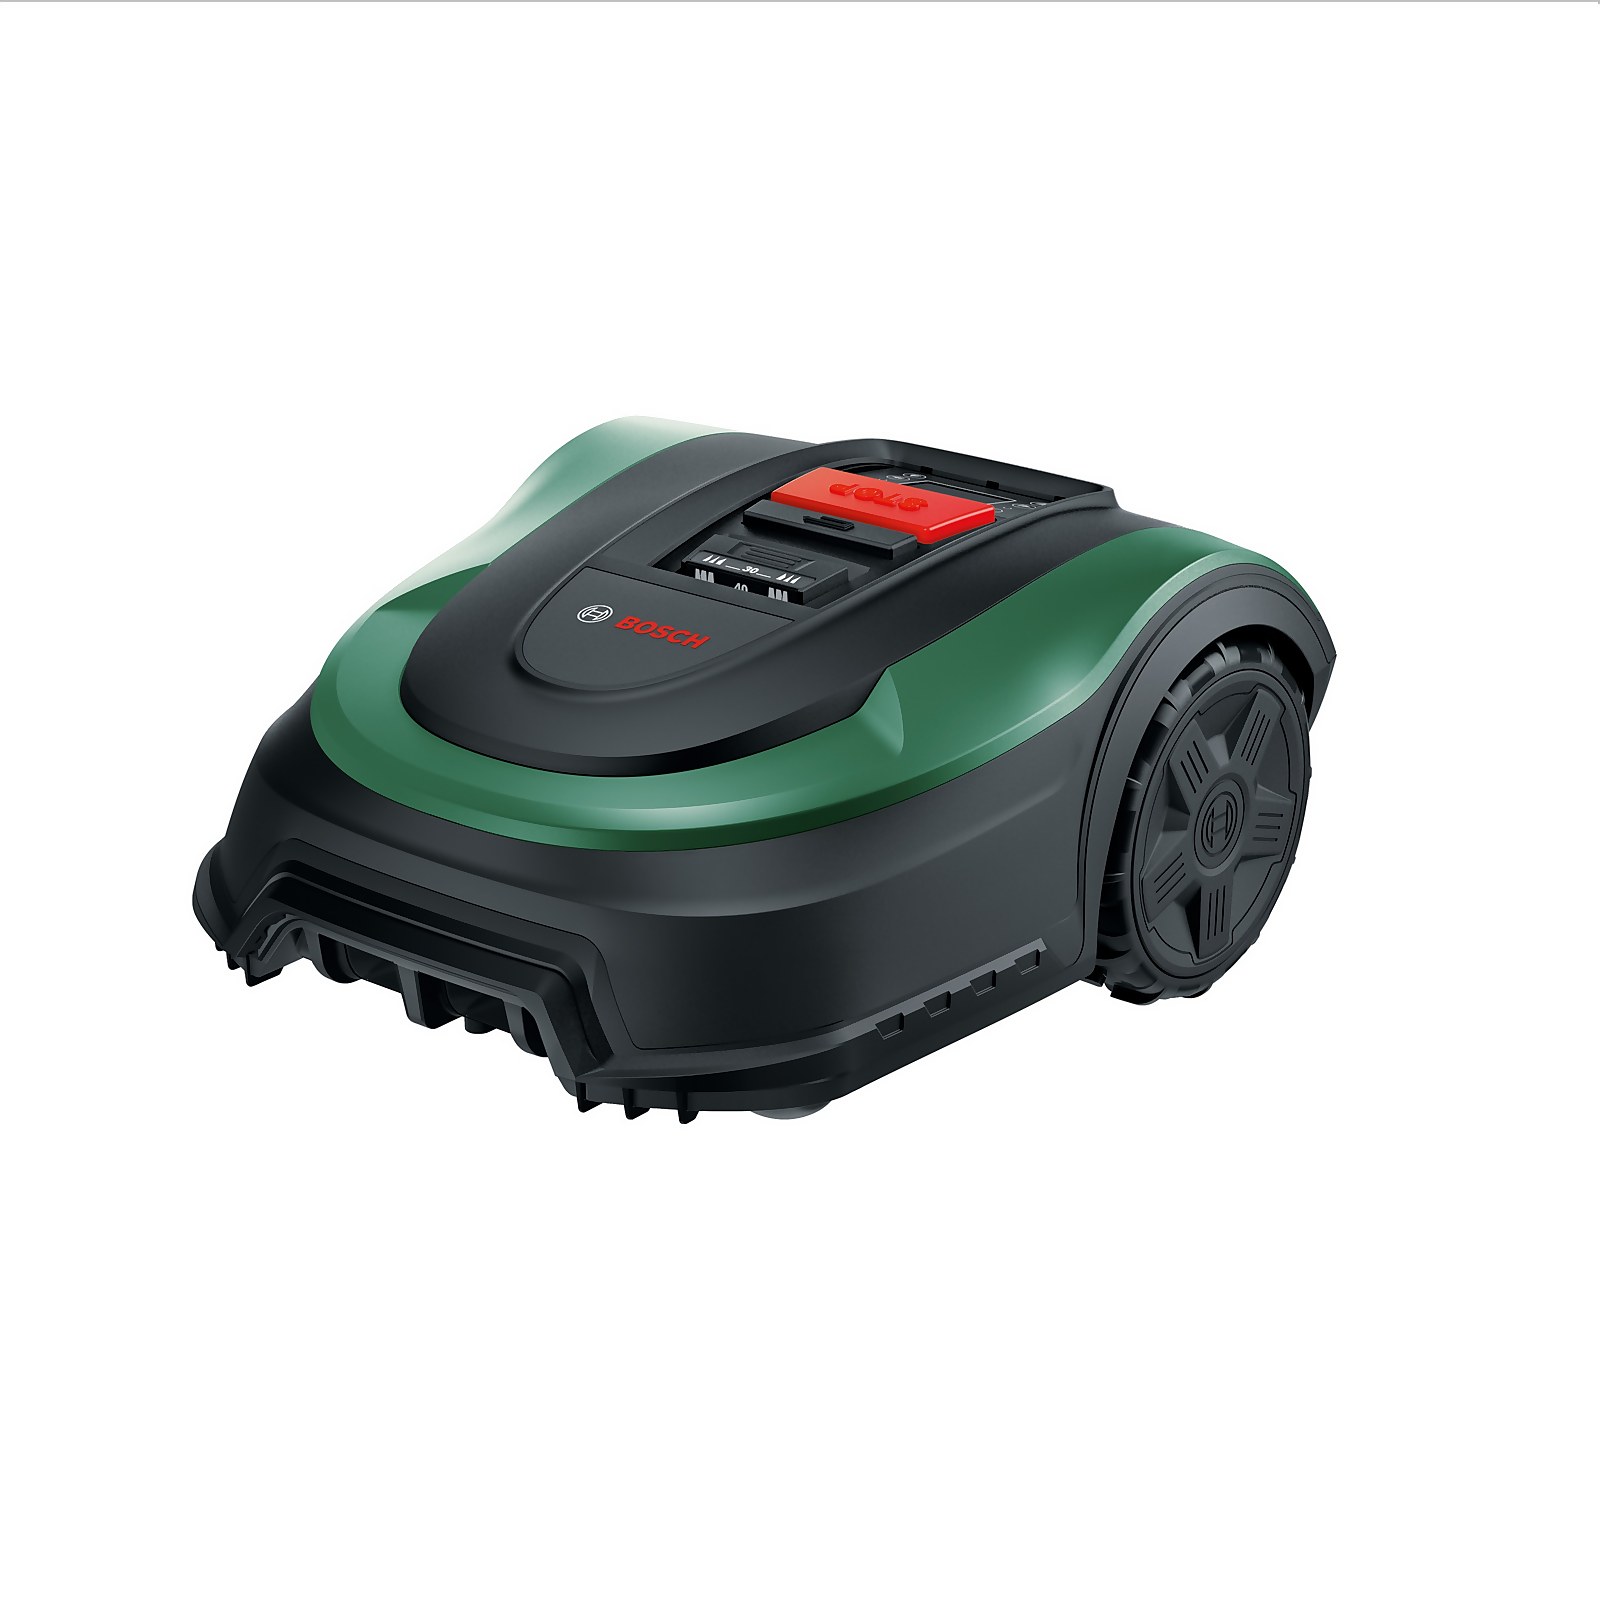 Bosch Indego XS 300 Robotic Lawn Mower